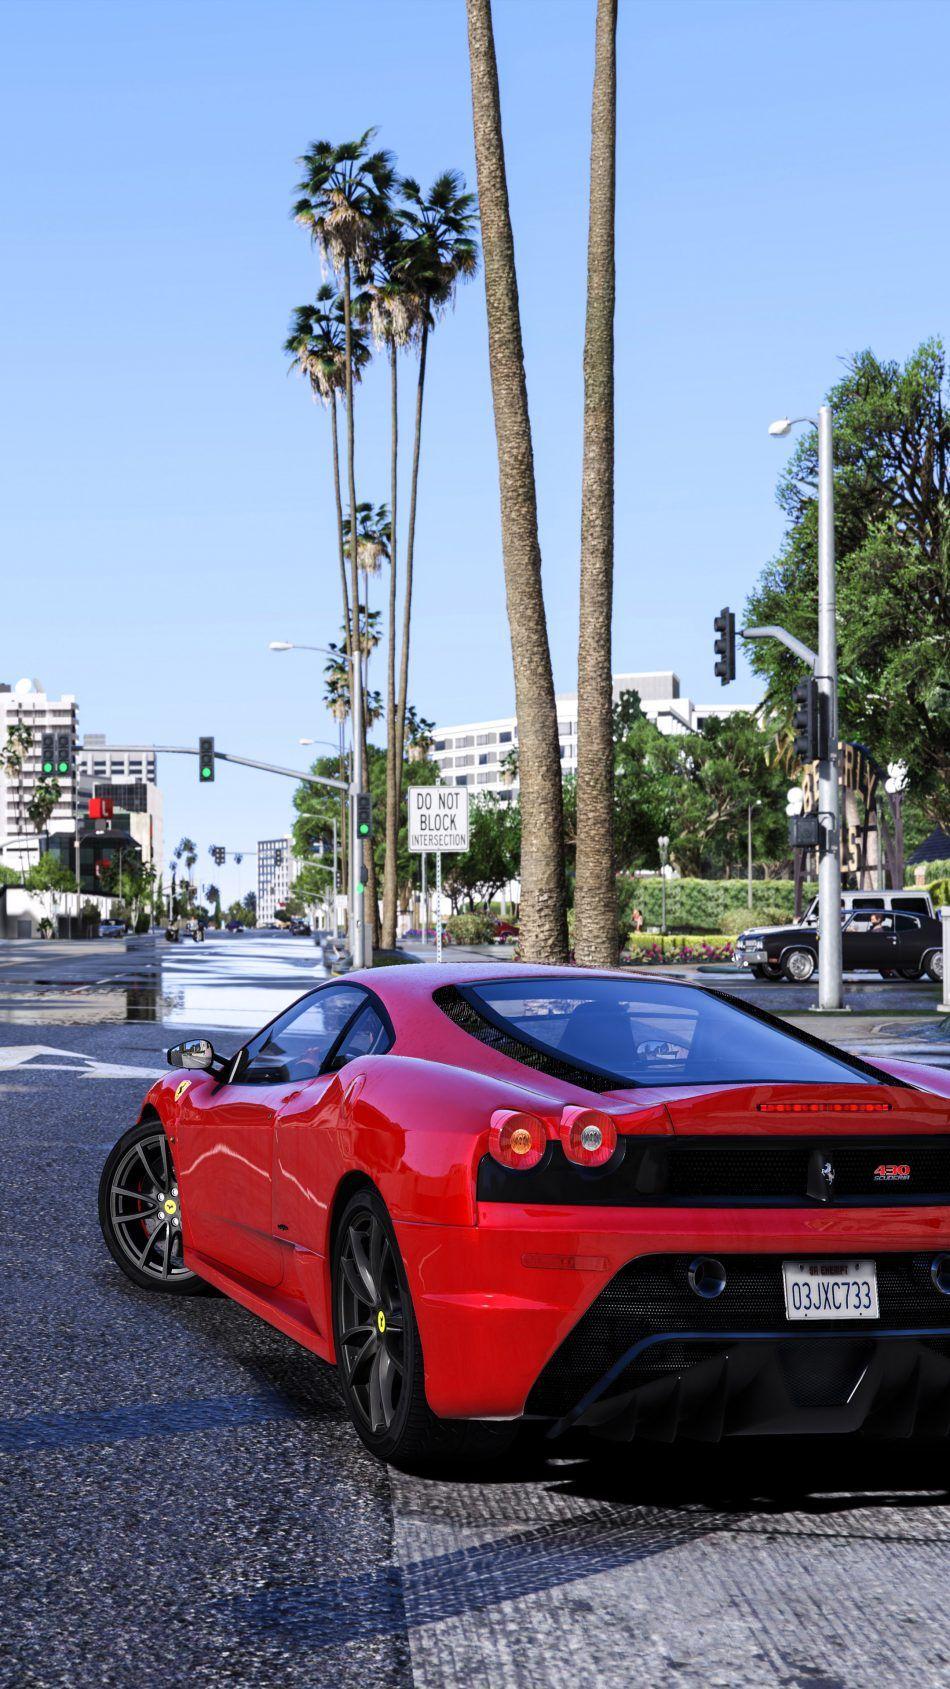 GTA V Red Ferrari 4K Ultra HD Mobile Wallpaper. Gta, Jogo de carro, Grand theft auto